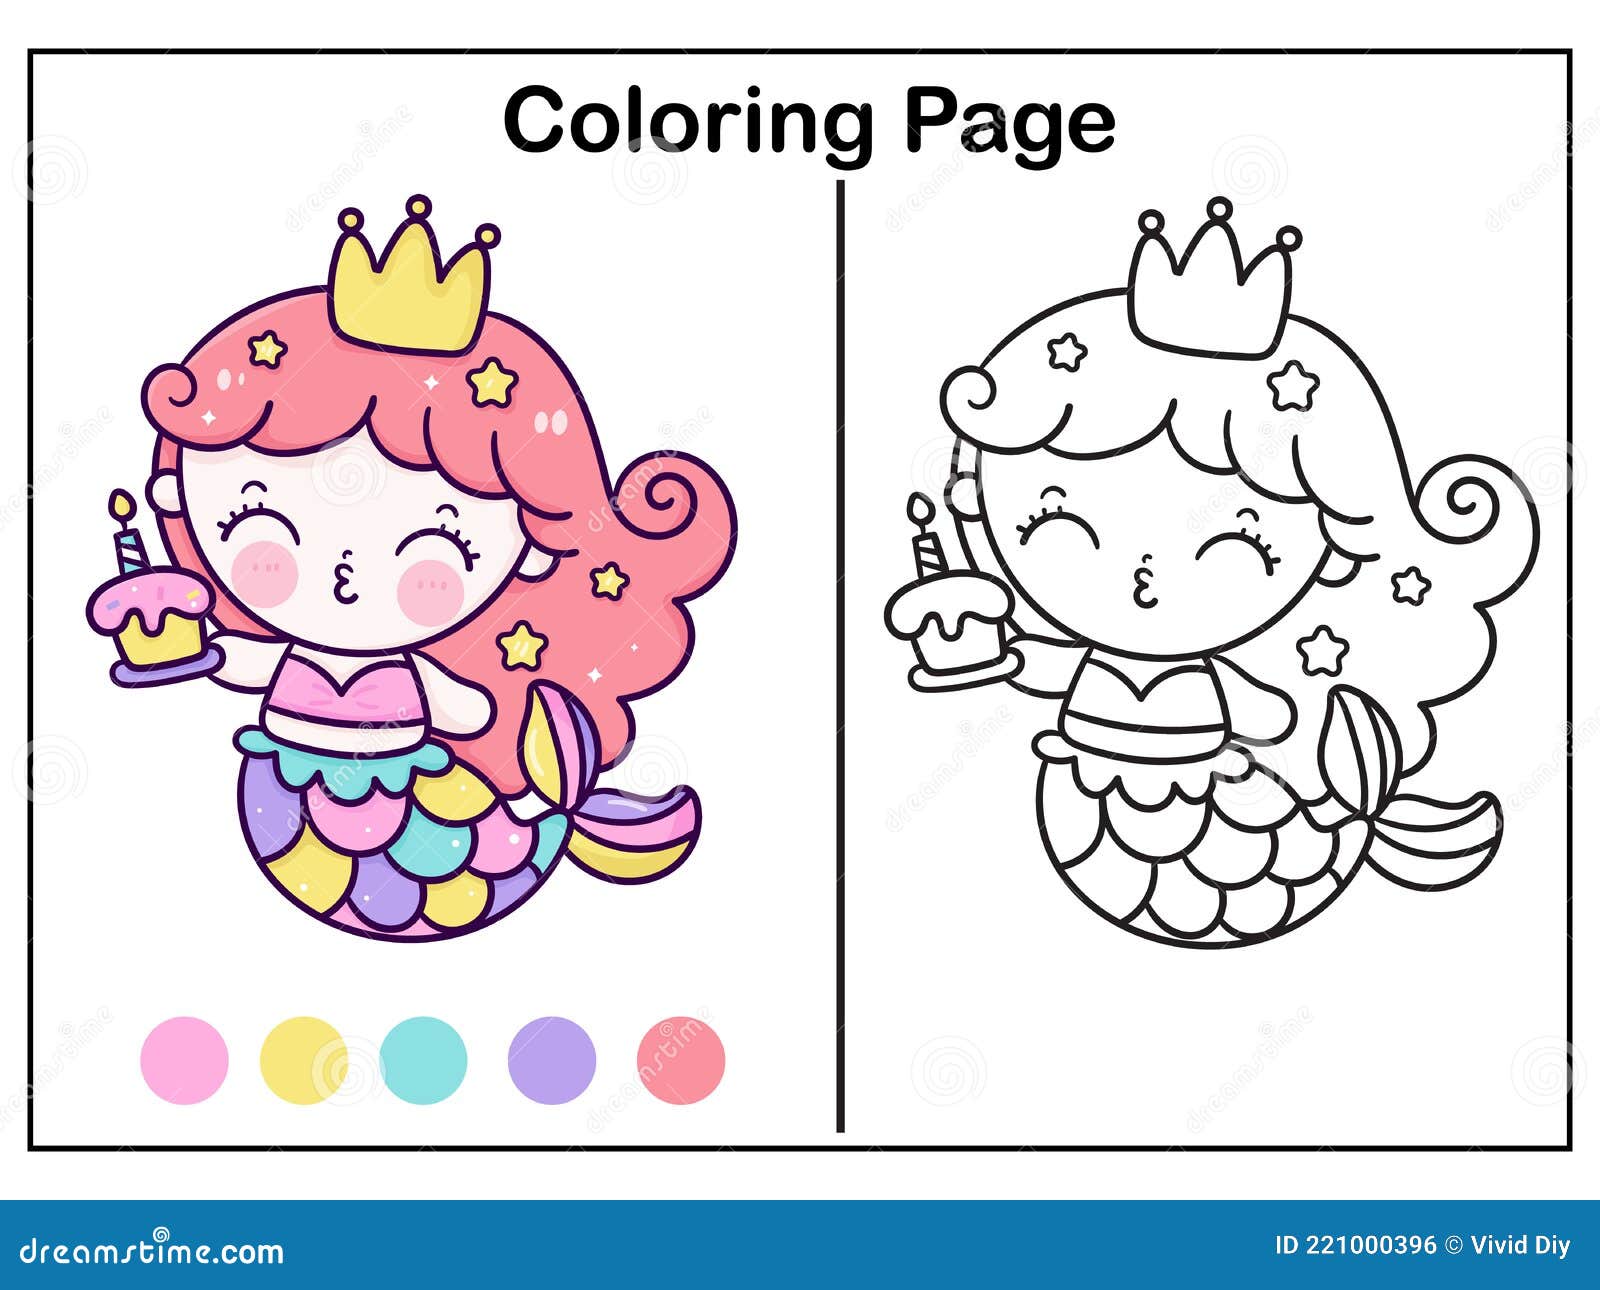 cute cartoon mermaids coloring pages